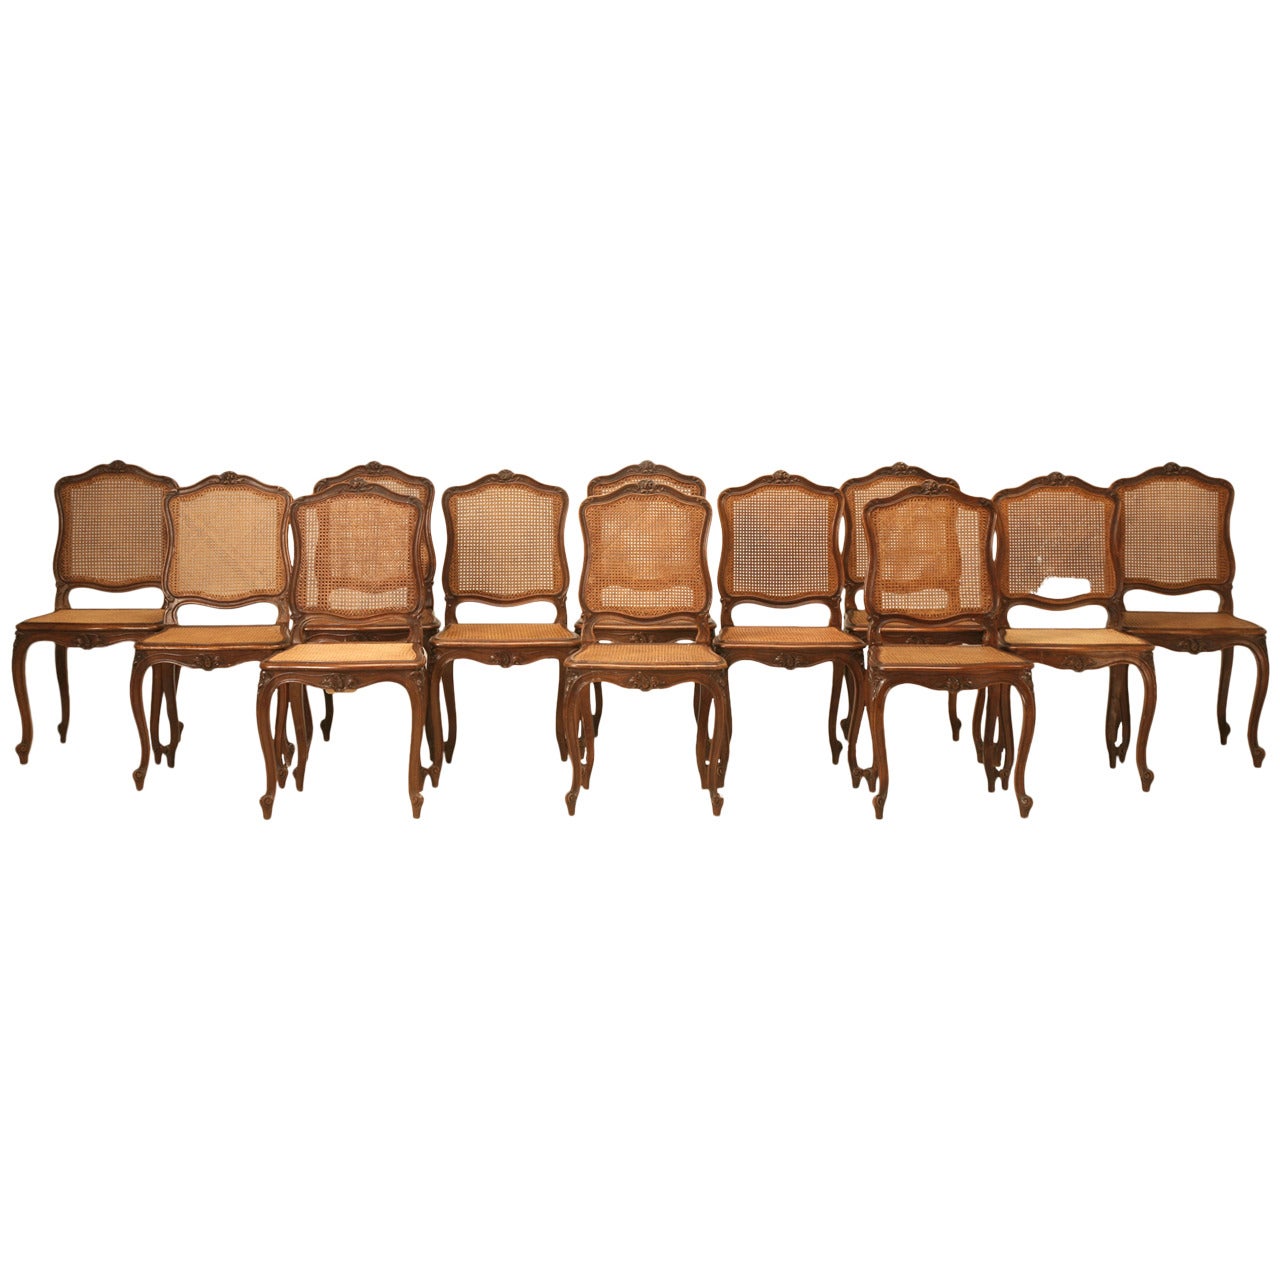 Rare Set of Twelve Matching Louis XV Style Walnut Dining Chairs